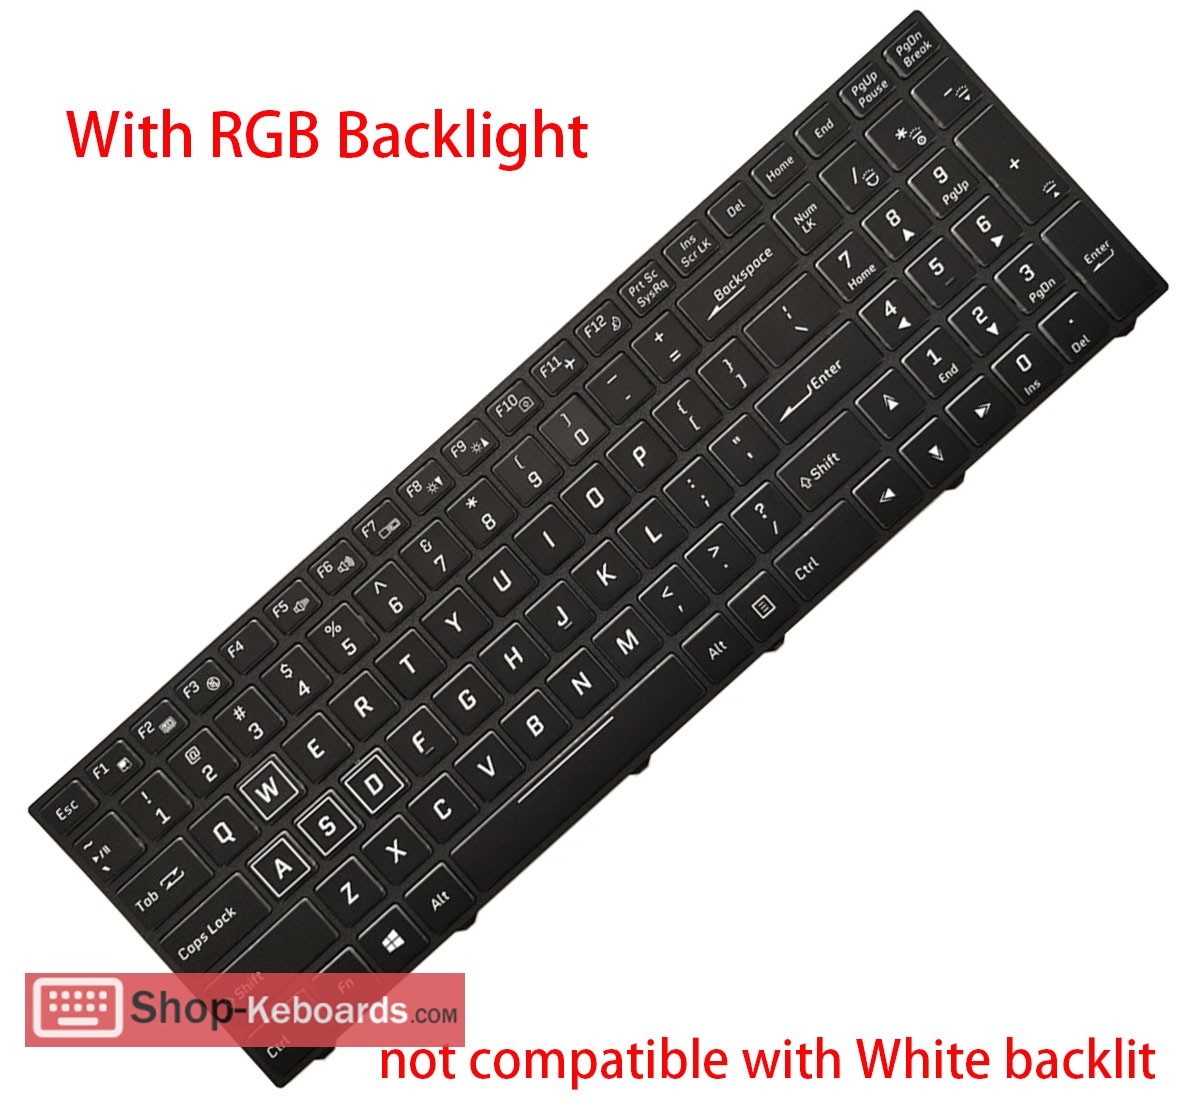 NEXOC G521 Keyboard replacement